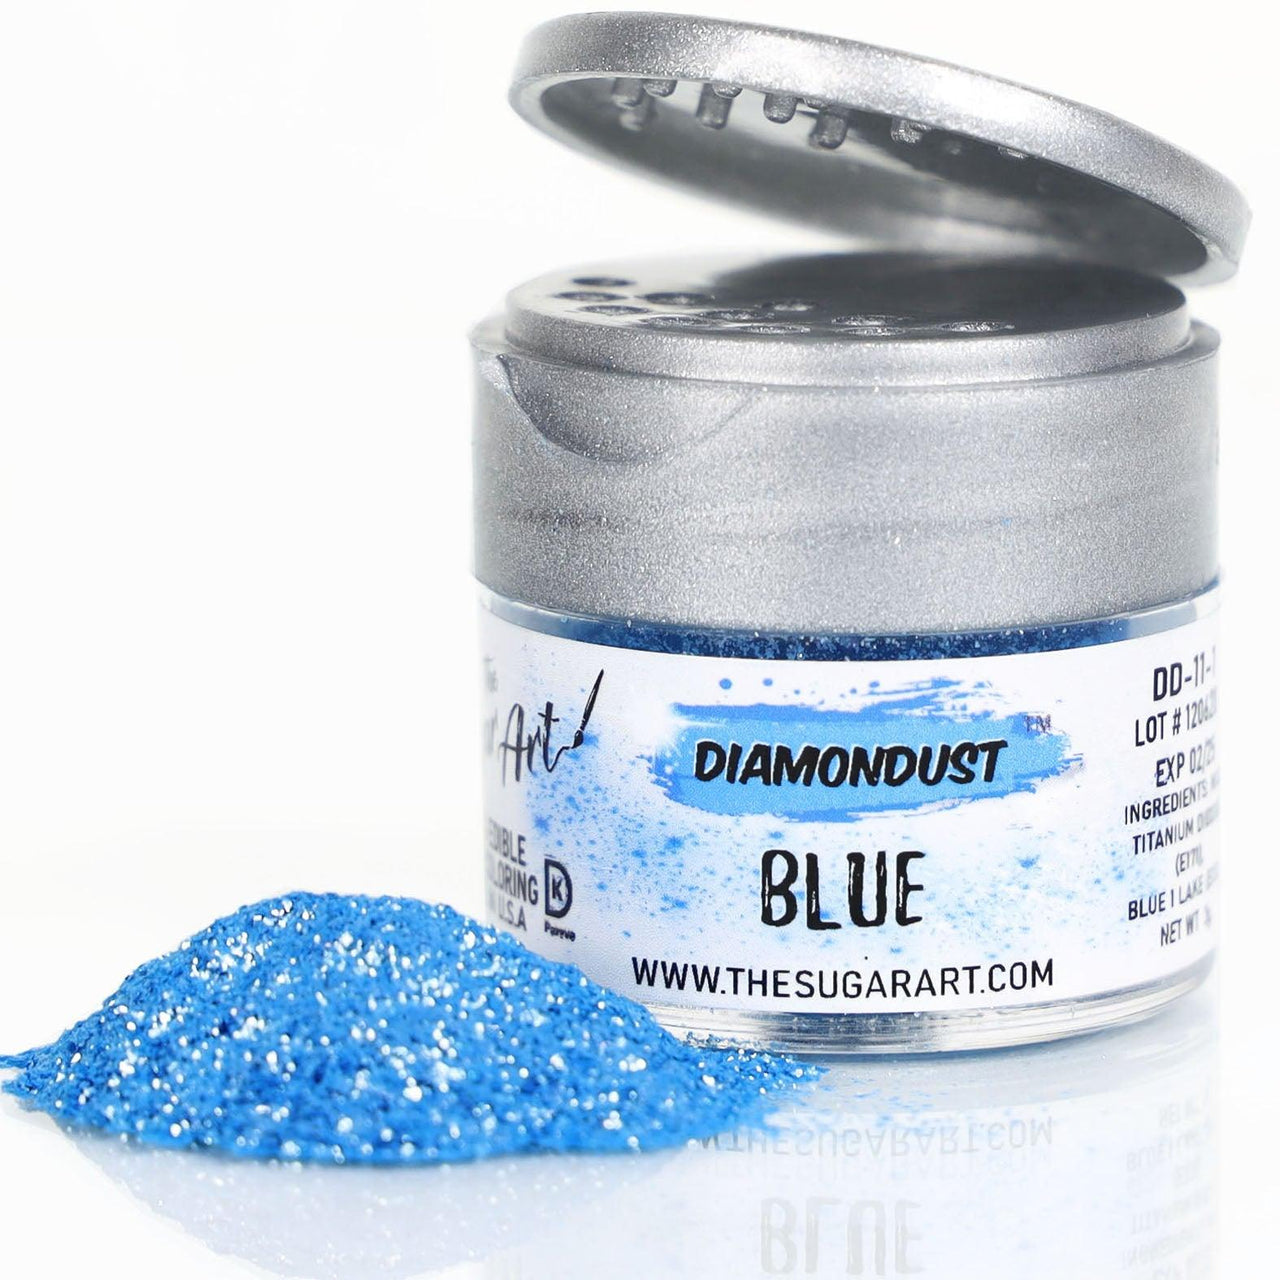 The Sugar Art - DiamonDust - Edible Glitter For Decorating Cakes, Cupcakes & More - Kosher, Food-Grade Coloring - Blue - 3 grams - ViaCheff.com